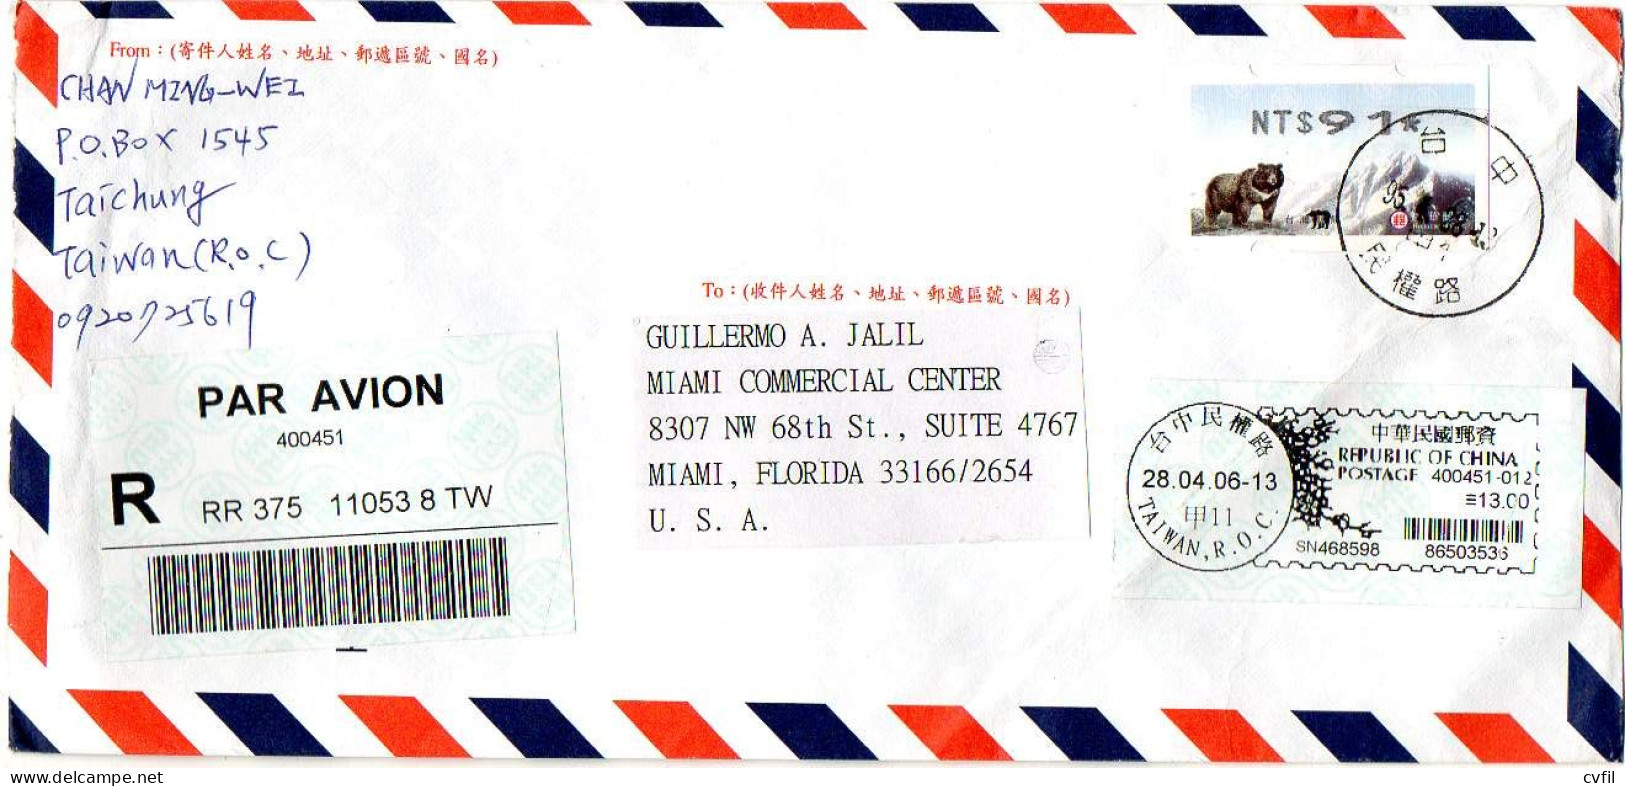 TAIWAN 2006. Regtd. Air Cover With Vending Machine Stamp Depicting A Bear, To USA - Cartas & Documentos